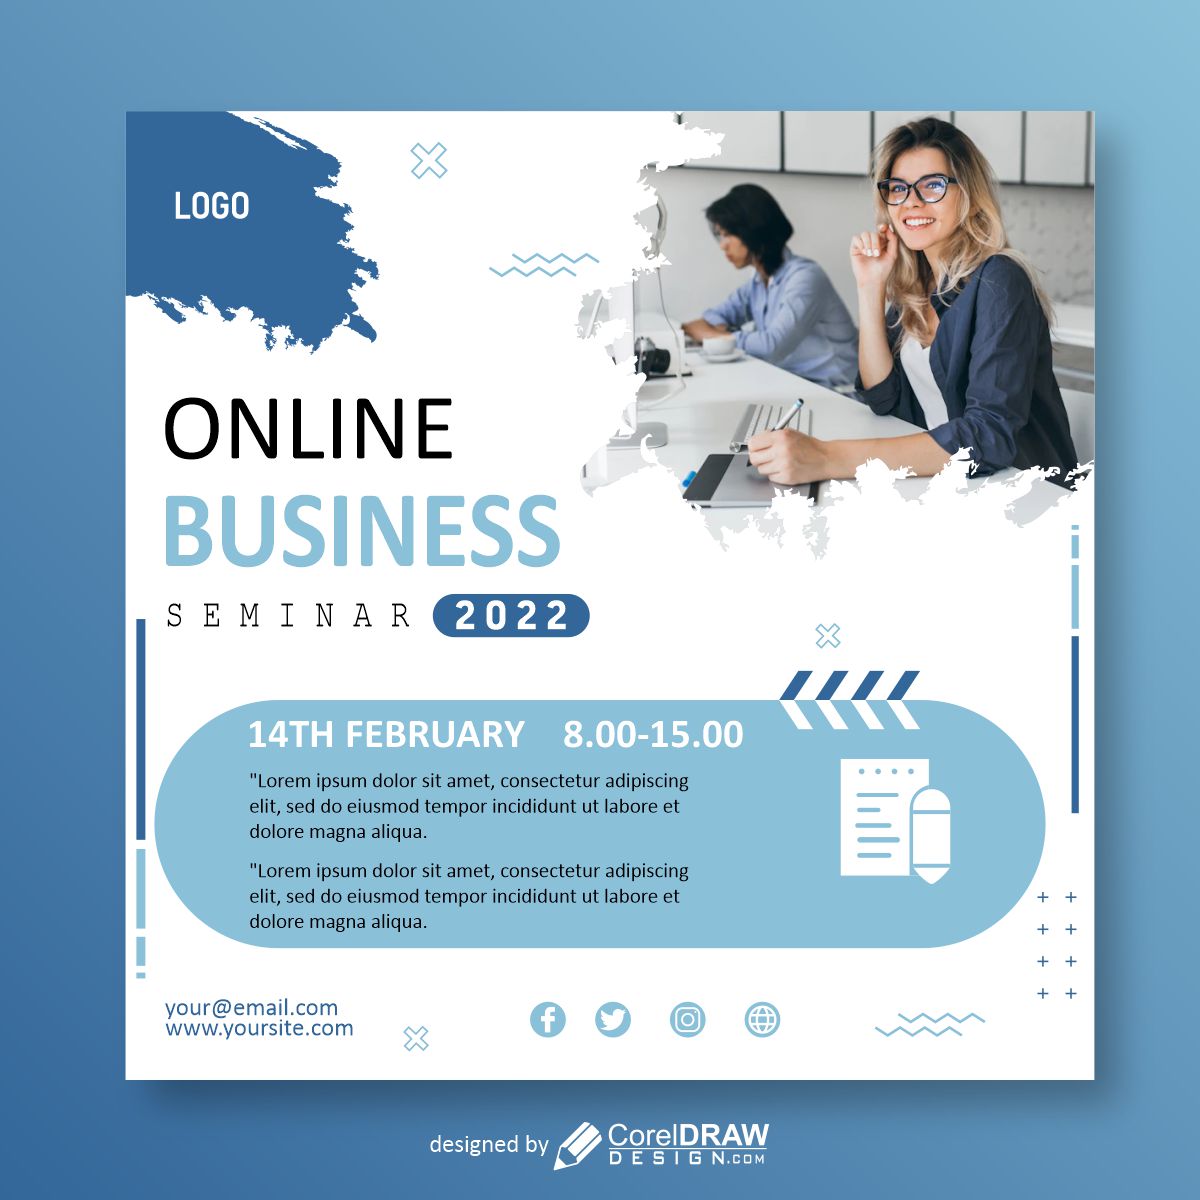 Online business poster vector design free image